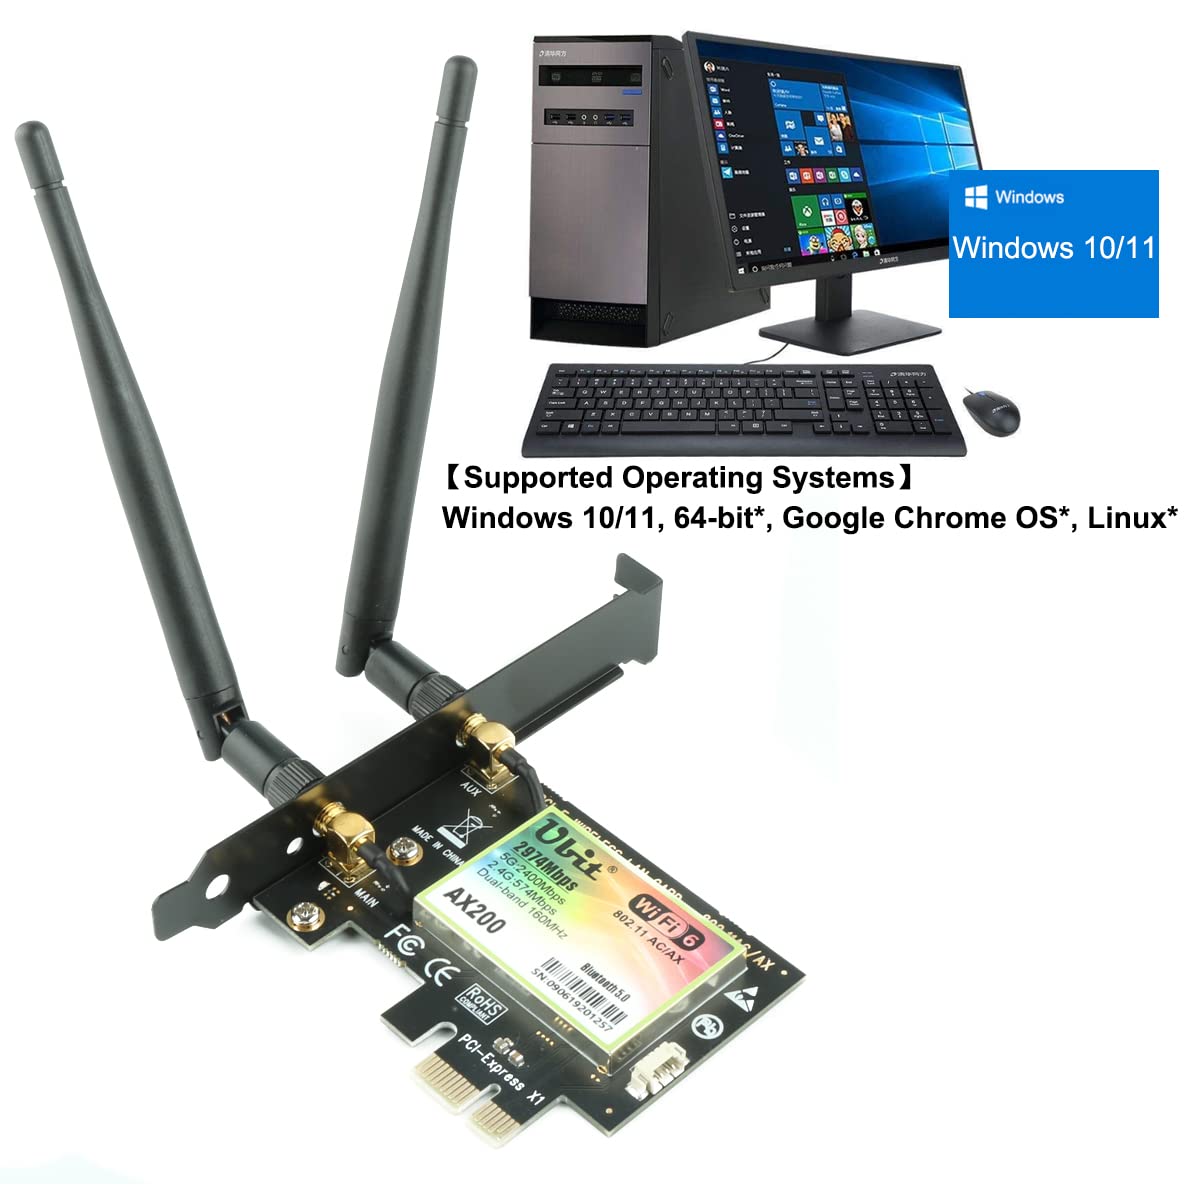 WiFi Card, Ubit AX/AC WiFi 6 Card Dual Band 2974 Mbps AX200 PCIE Bluetooth WLAN Network WiFi Card with Bluetooth 5.0 | MU-MIMO| OFDMA| Ultra-Low Latency, Support WIN 10-64B